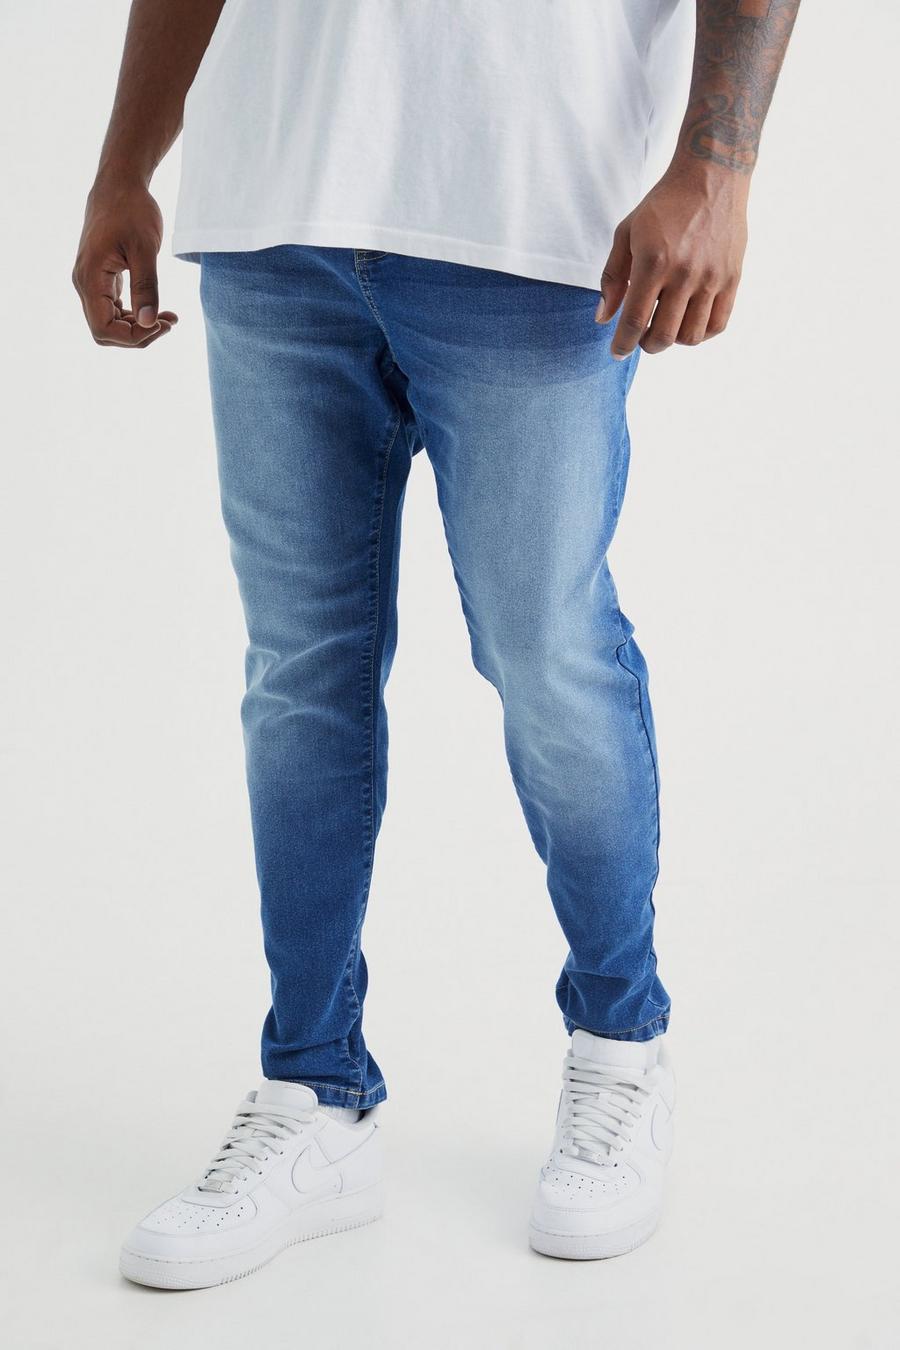 Grande taille - Jean stretch super skinny, Mid blue